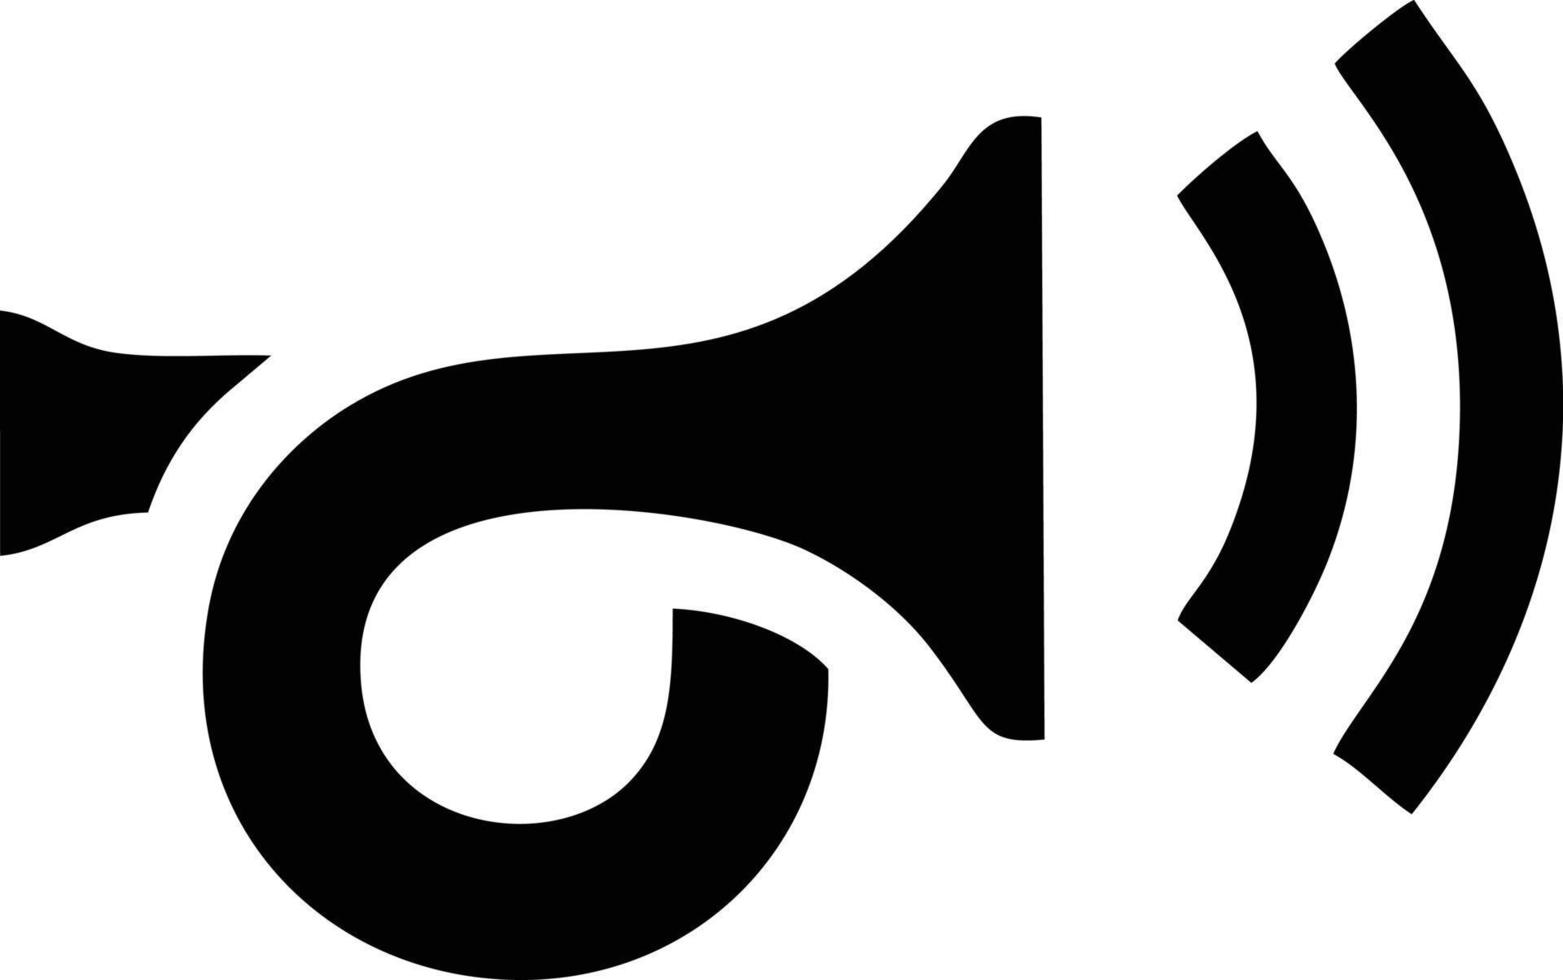 Trompete Instrument Symbol Symbol Design Vektor Bild. Illustration von Musical Trompete Horn Vektor Design Bild. eps 10